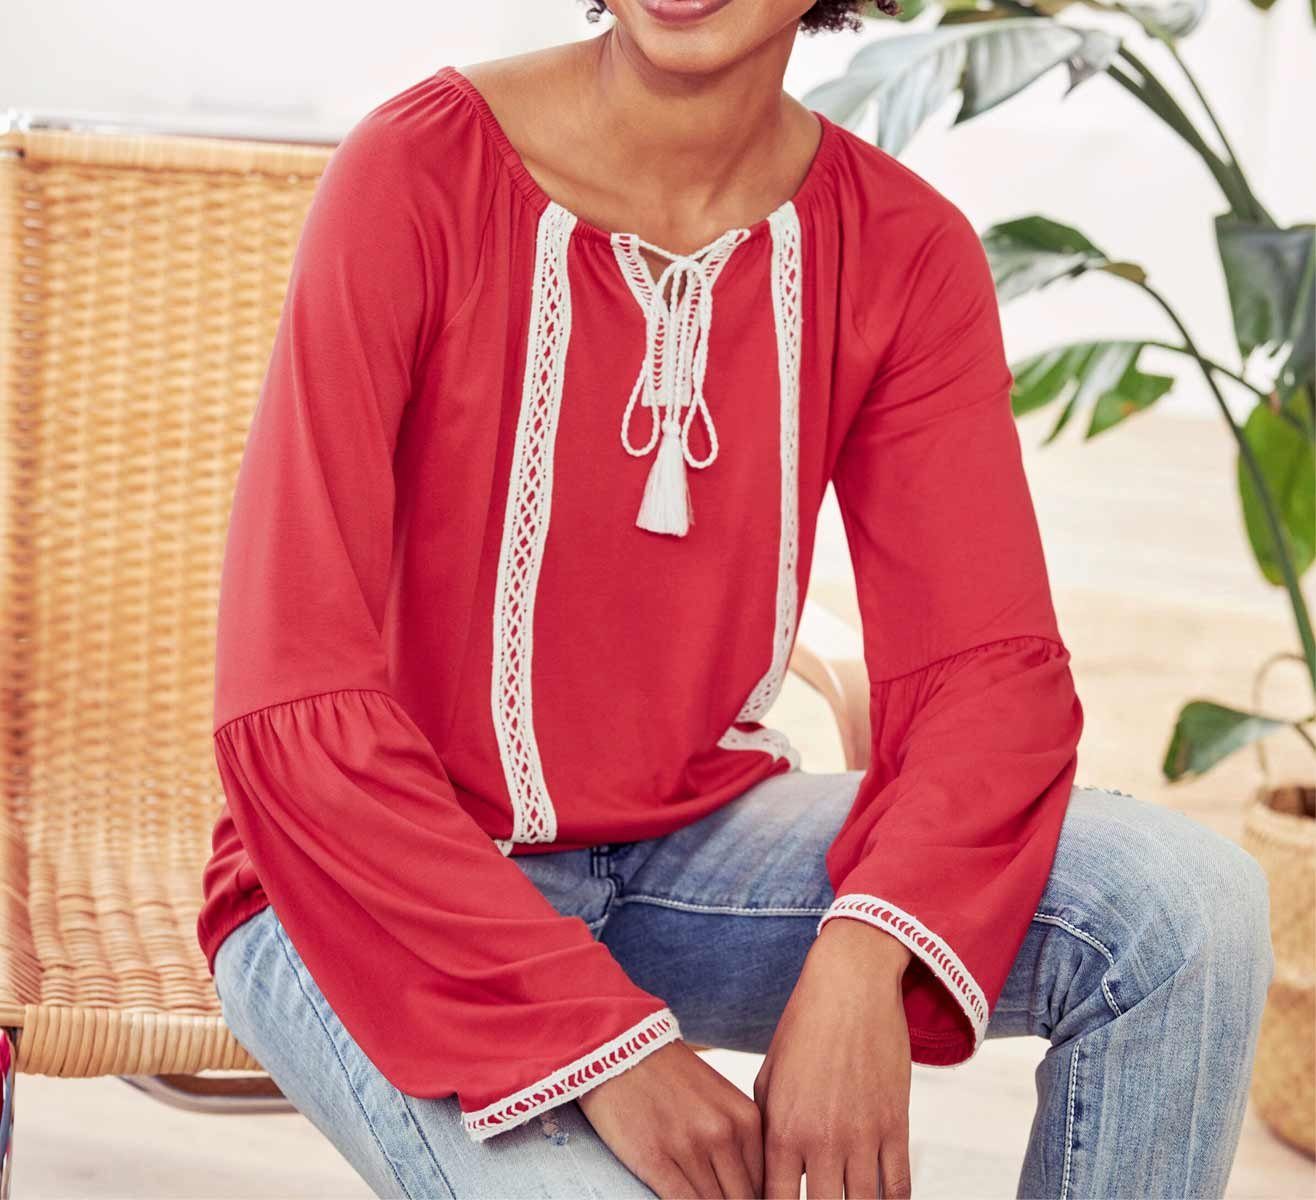 LINEA Damen TESINI Designer-Shirt heine m. erdbeere Crochet, Spitzenshirt